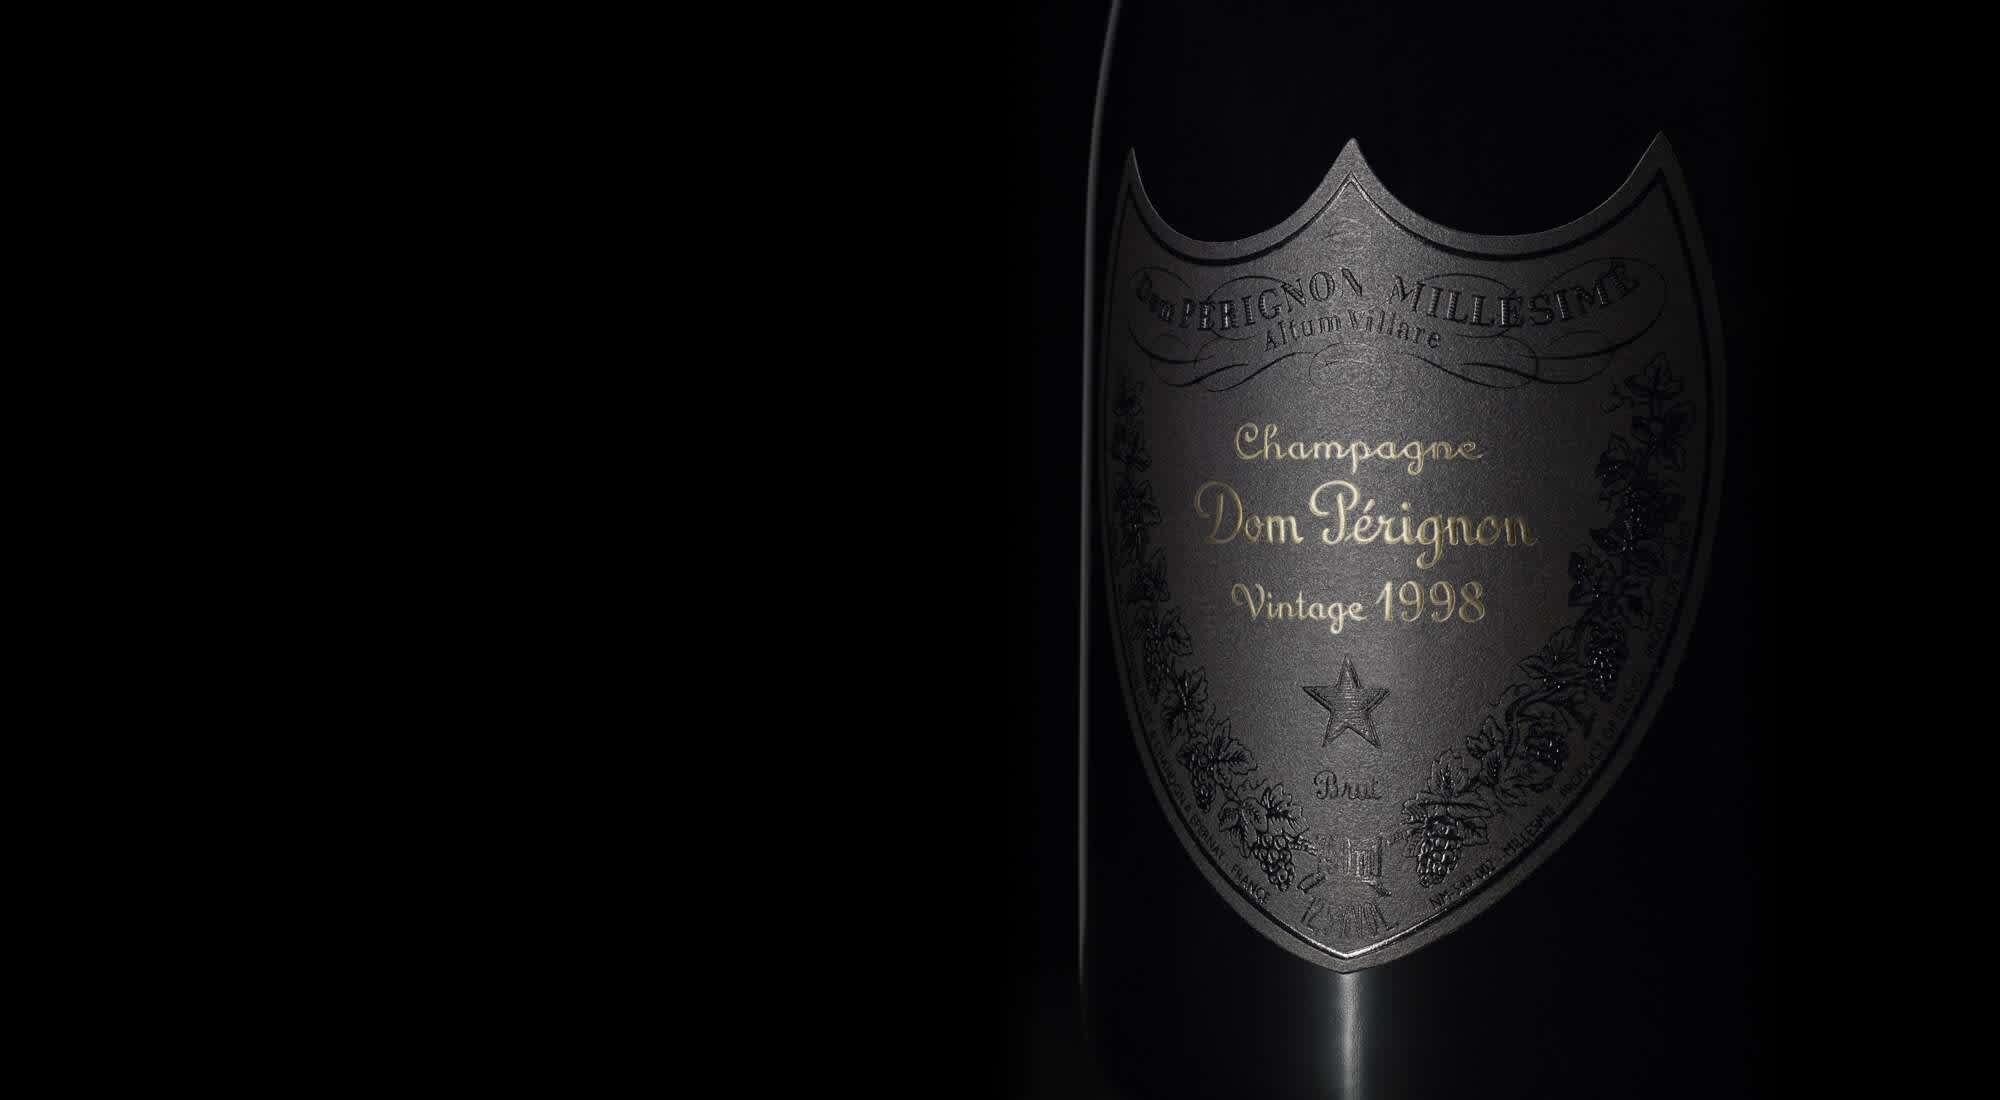 Drinking the Best Champagne - Dom Pérignon - Alexa's Wine Diary